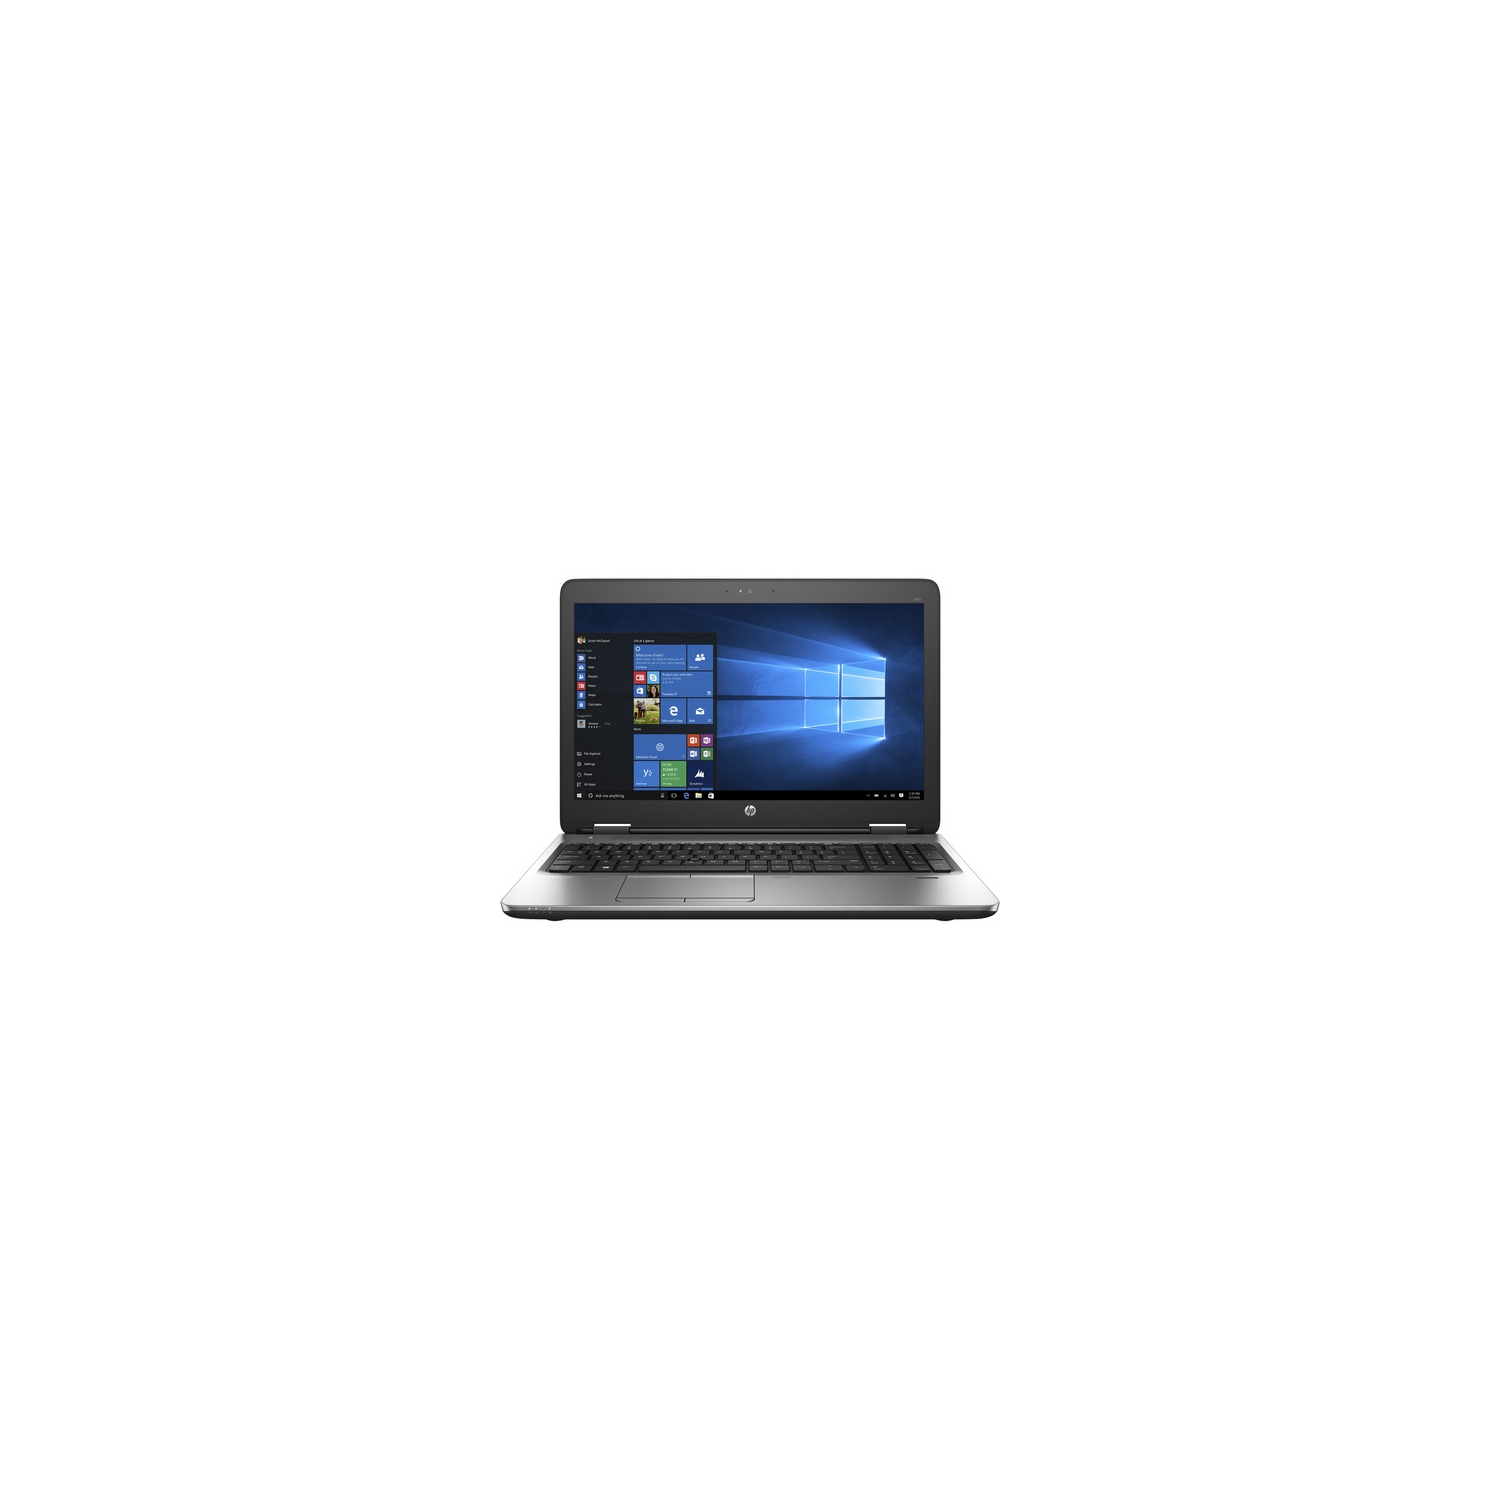 Refurbished (Excellent) - HP ProBook 650 G2 15.6" Laptop,Intel Core i5 6300U up to 3.0G,8G DDR4,500G,VGA,DP,DVD,USB Type-C,W10P64 (EN/FR/ES)